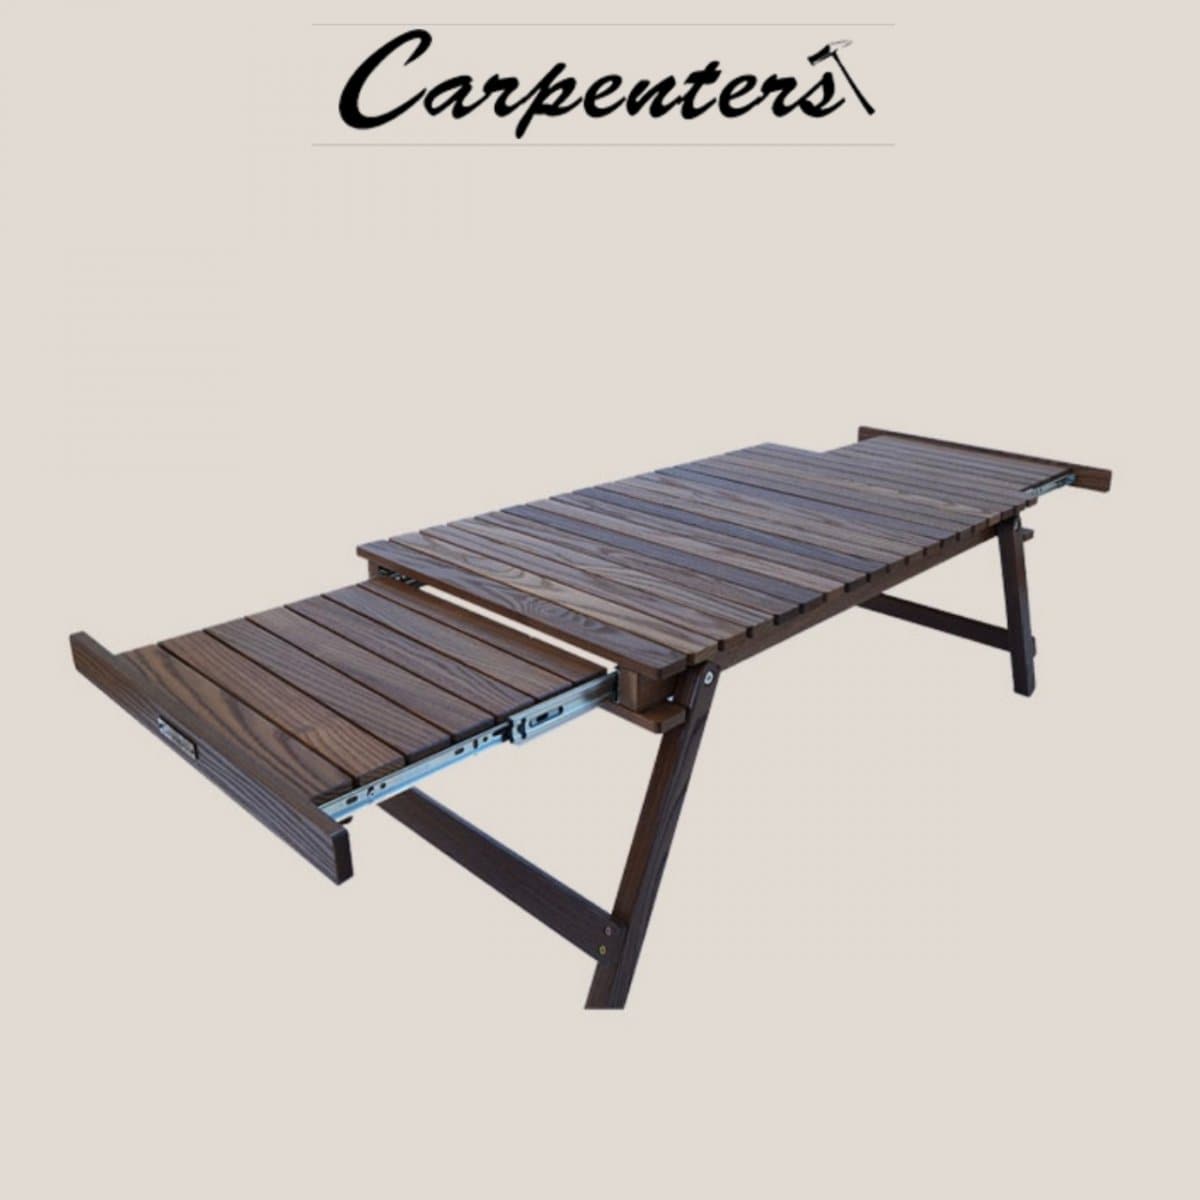 Carpenters レールテーブル extension Table アウトドアテーブル 折りたたみ式 ウッドテーブル 木製 キャンプ バーベキュー 韓国